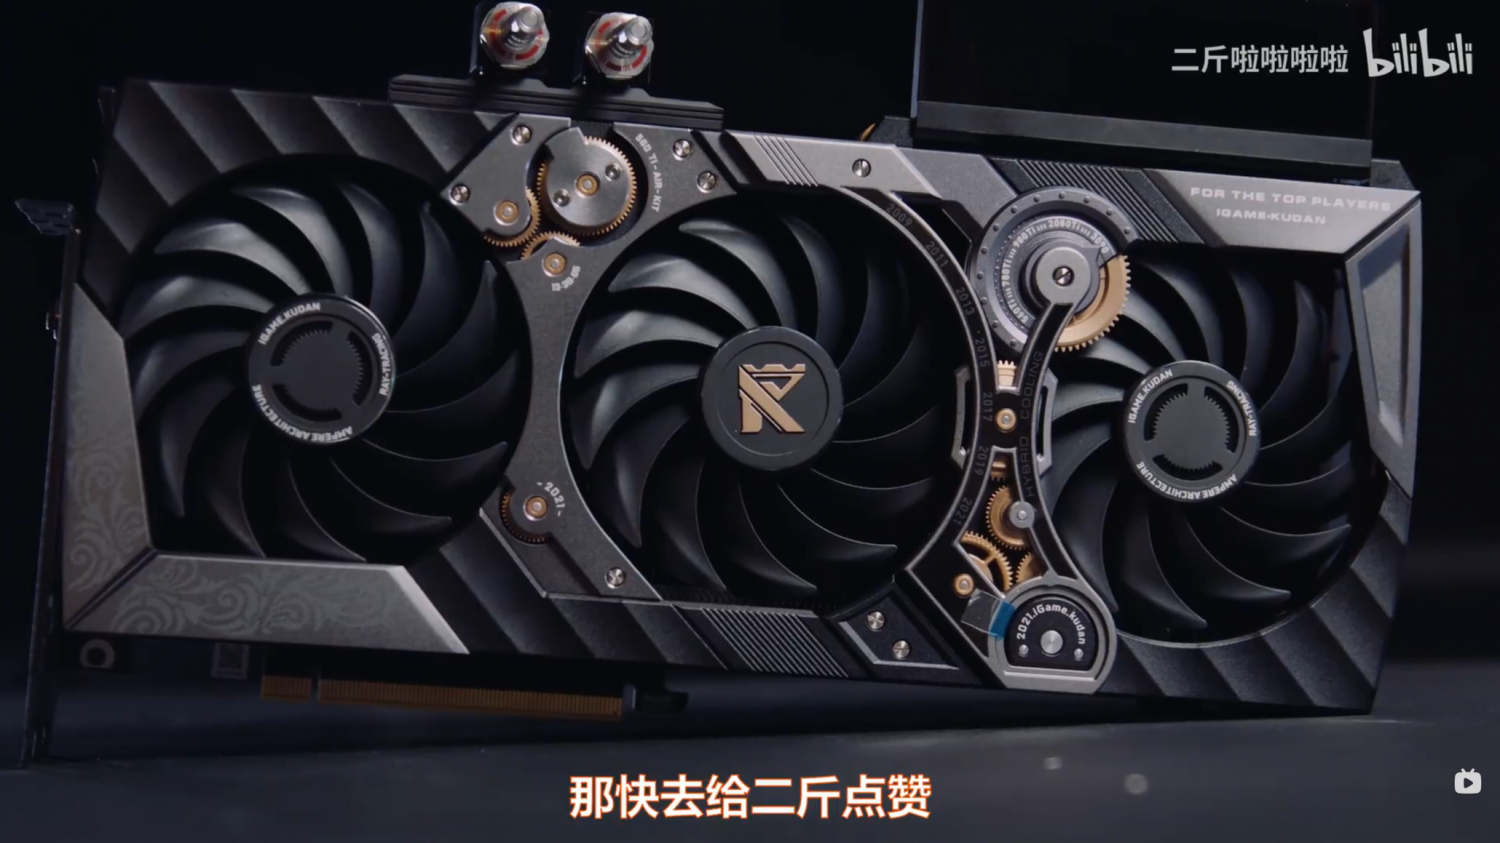 COLORFUL iGame RTX 3090 KUDAN: $4999+ GPU gets teardown treatment